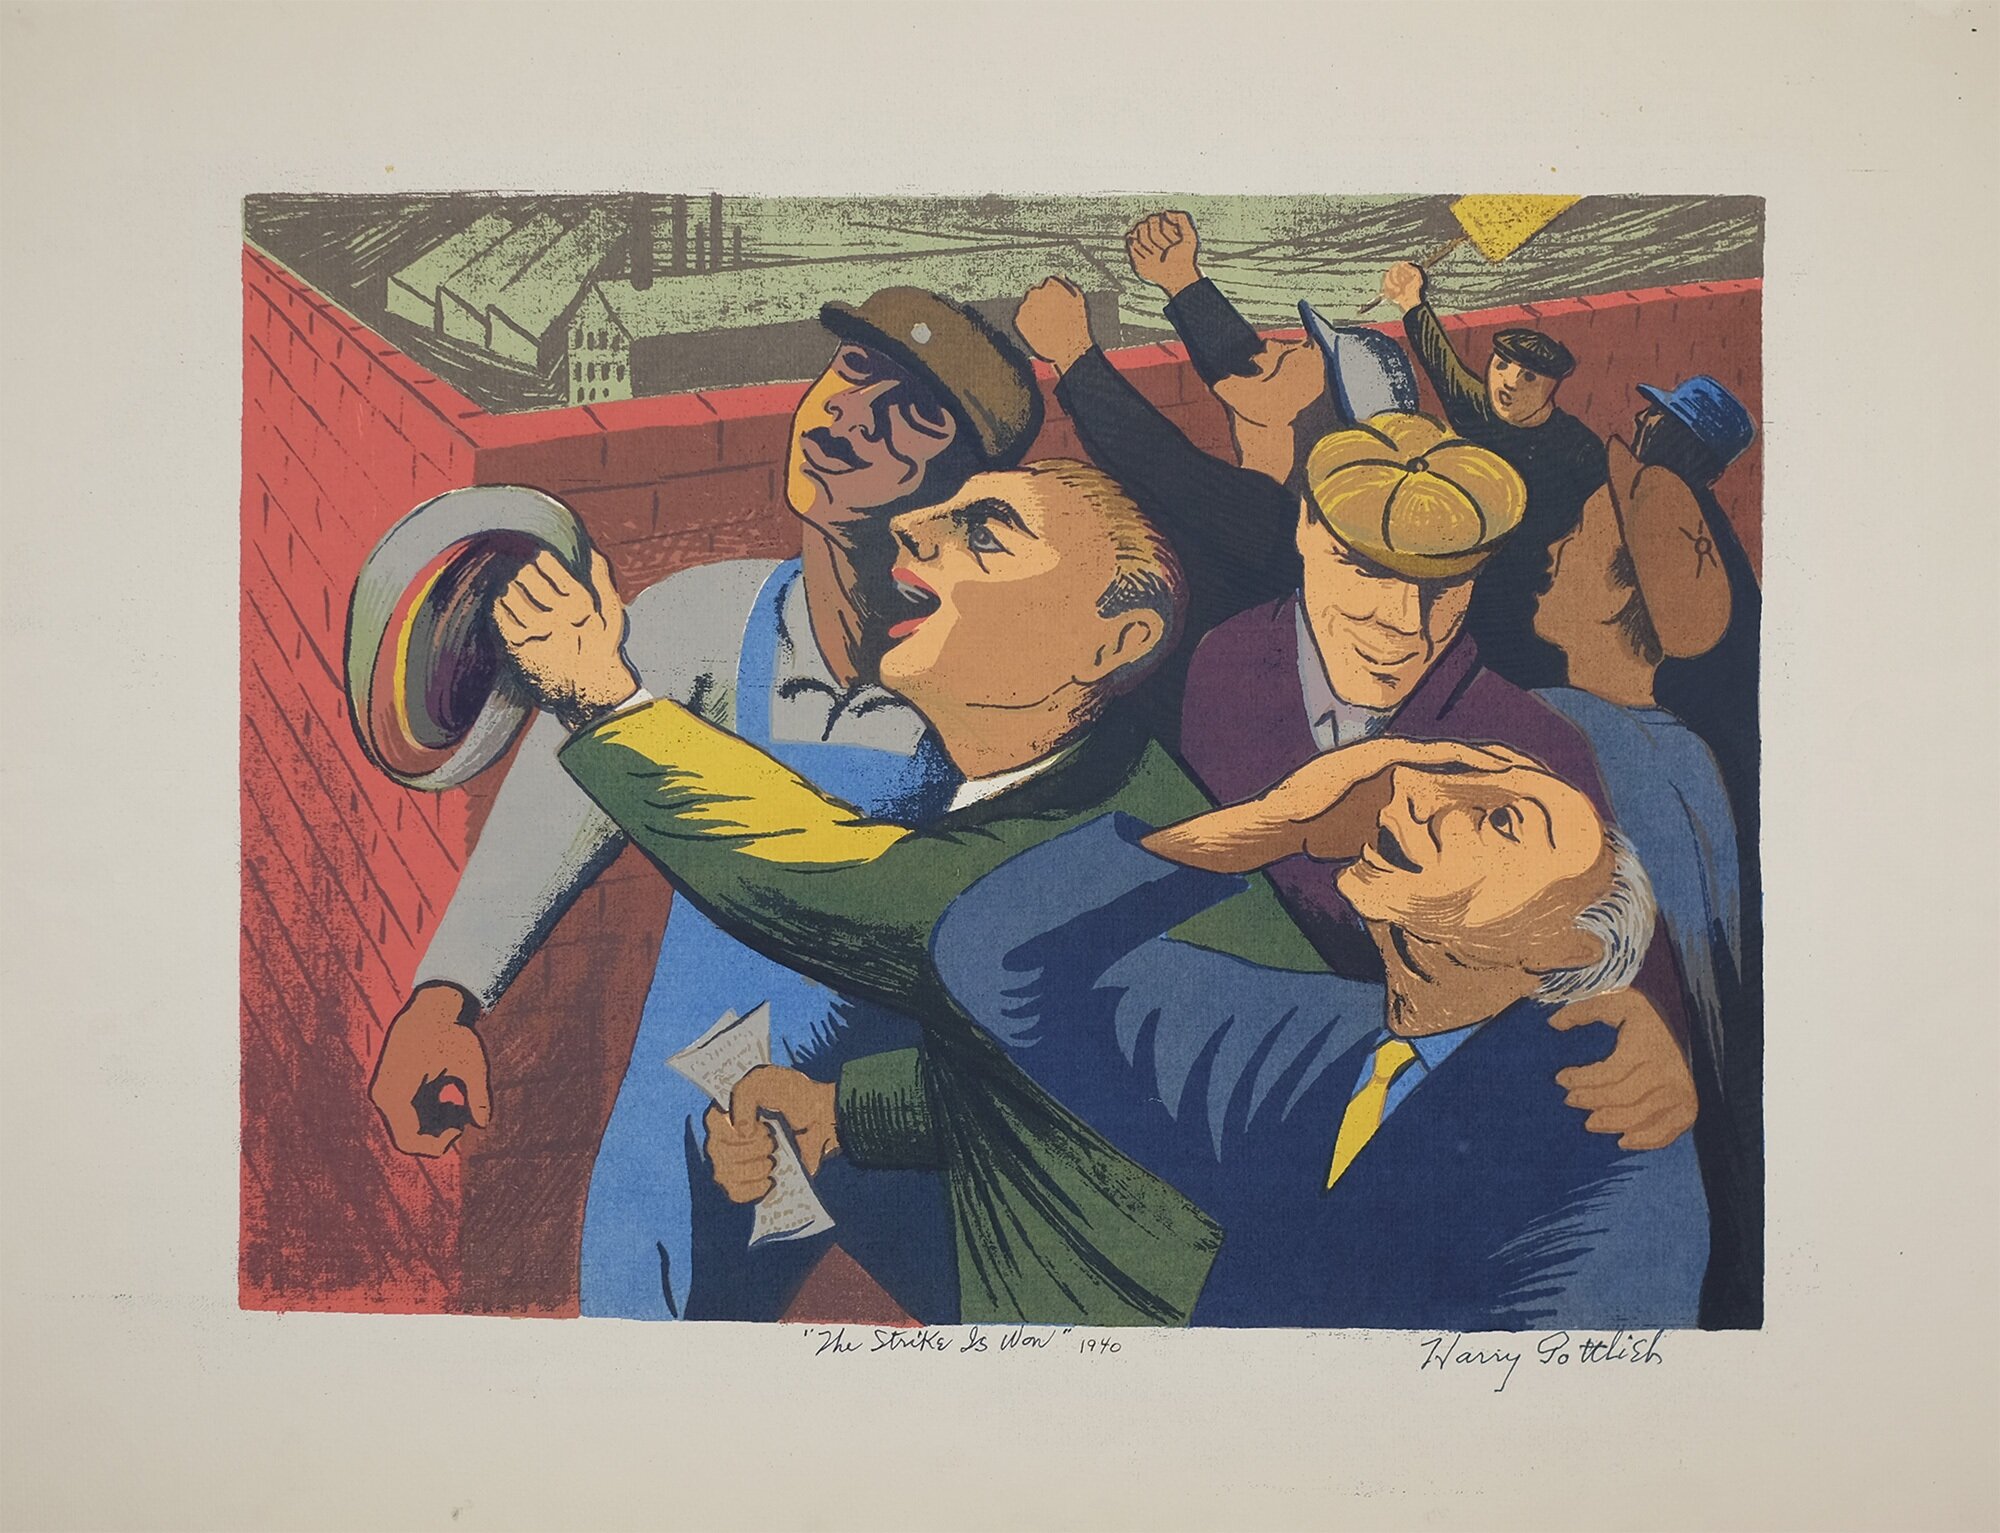 Harry Gottlieb, American, born Romania, 1895 - 1992. The Strike is Won, 1940. Silkscreen on paper, 18 × 23 inches.